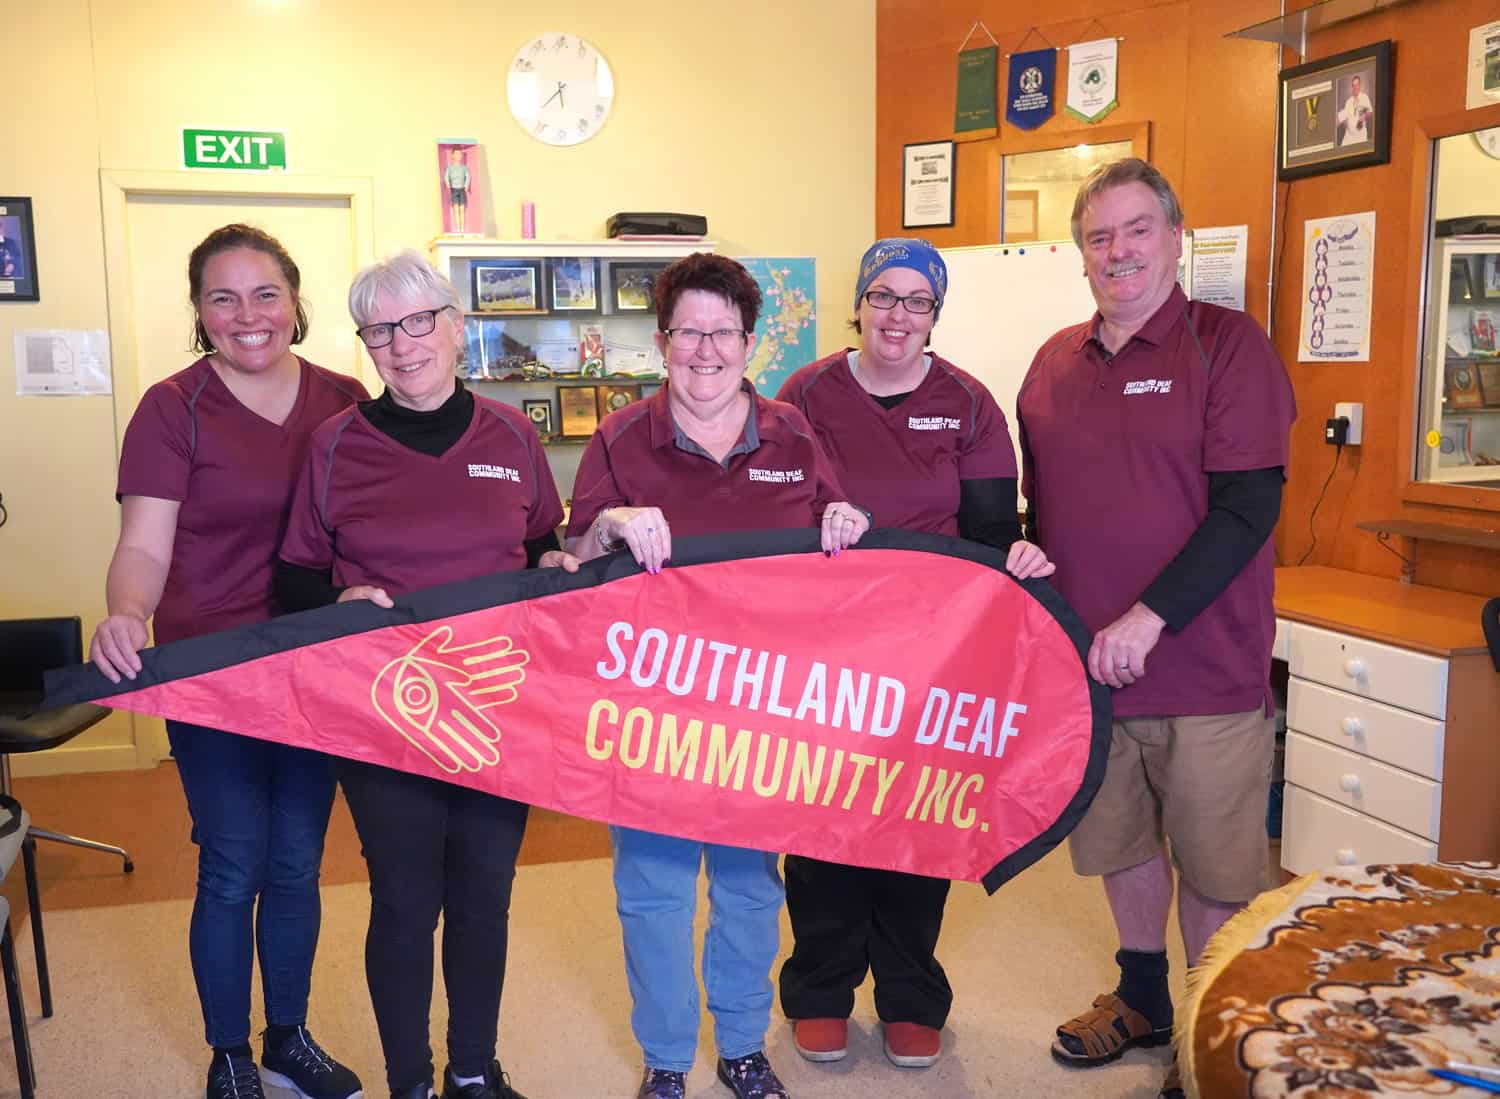 Southland Deaf Community